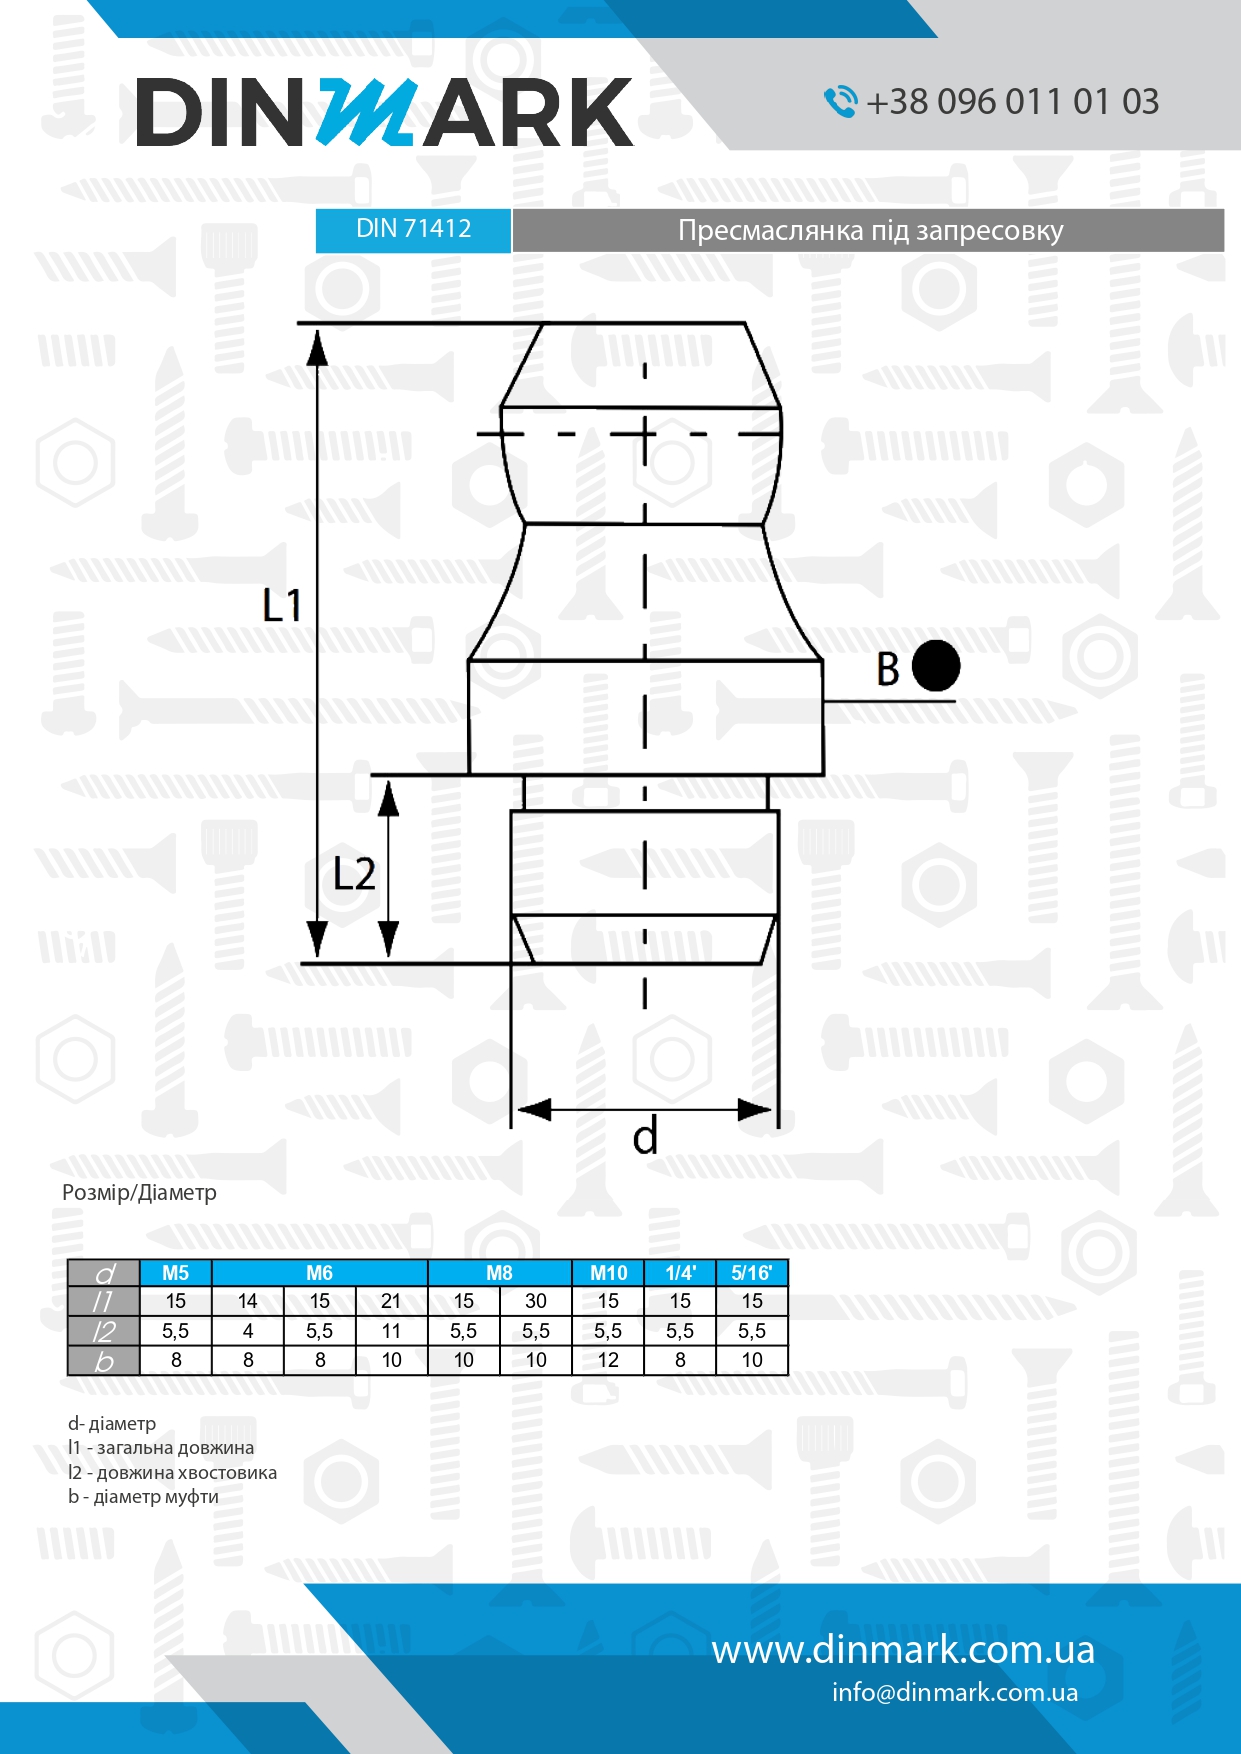 DIN 71412-A A1 Пресс-масленка под запрессовку 180 градусов pdf